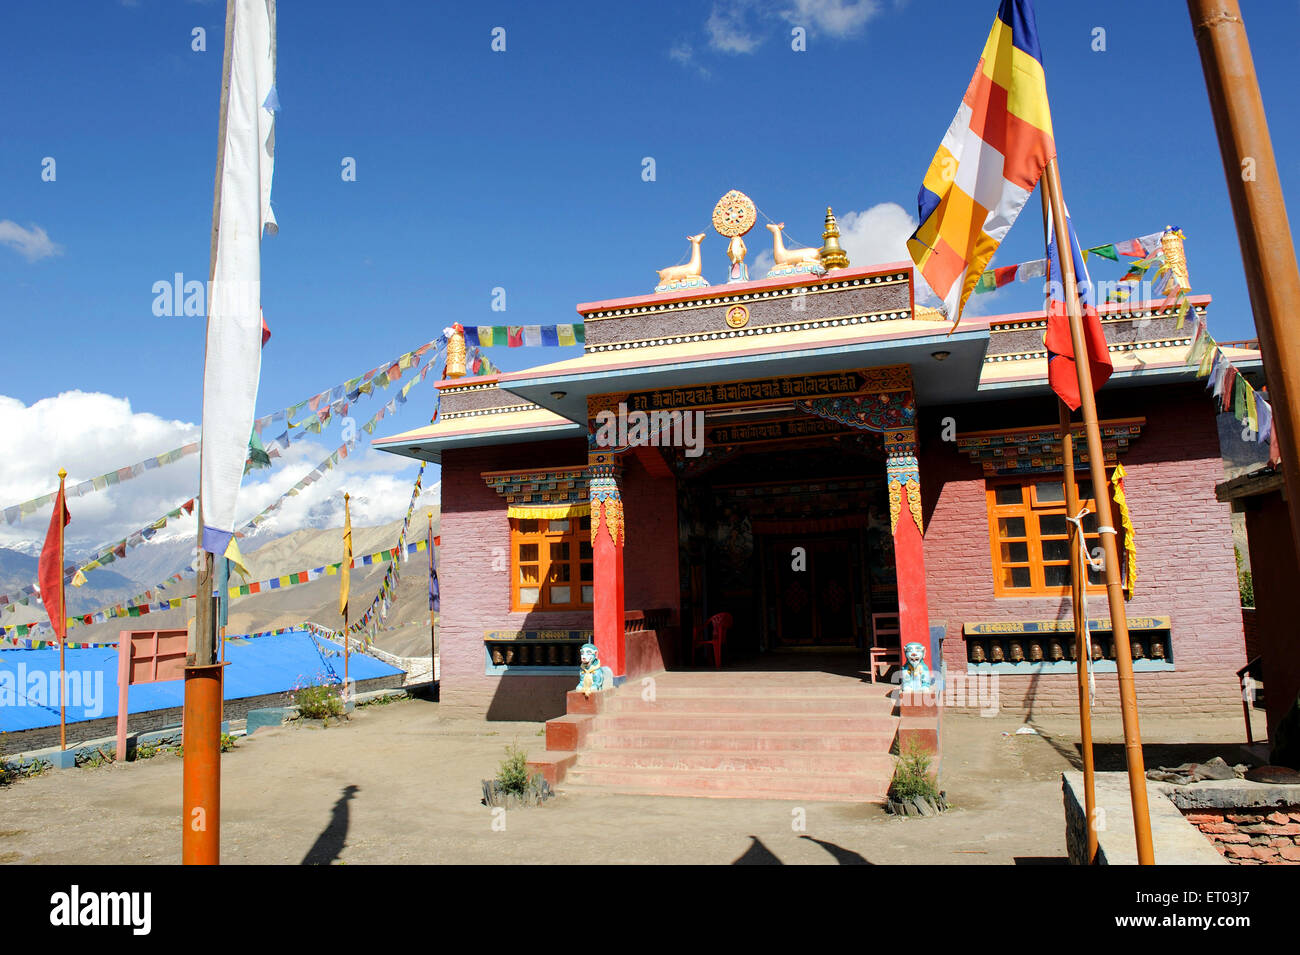 Kloster, Muktinath, Ranipauwa, Mustang, Nepal, Föderale Demokratische Republik Nepal, Südasien, Asien Stockfoto